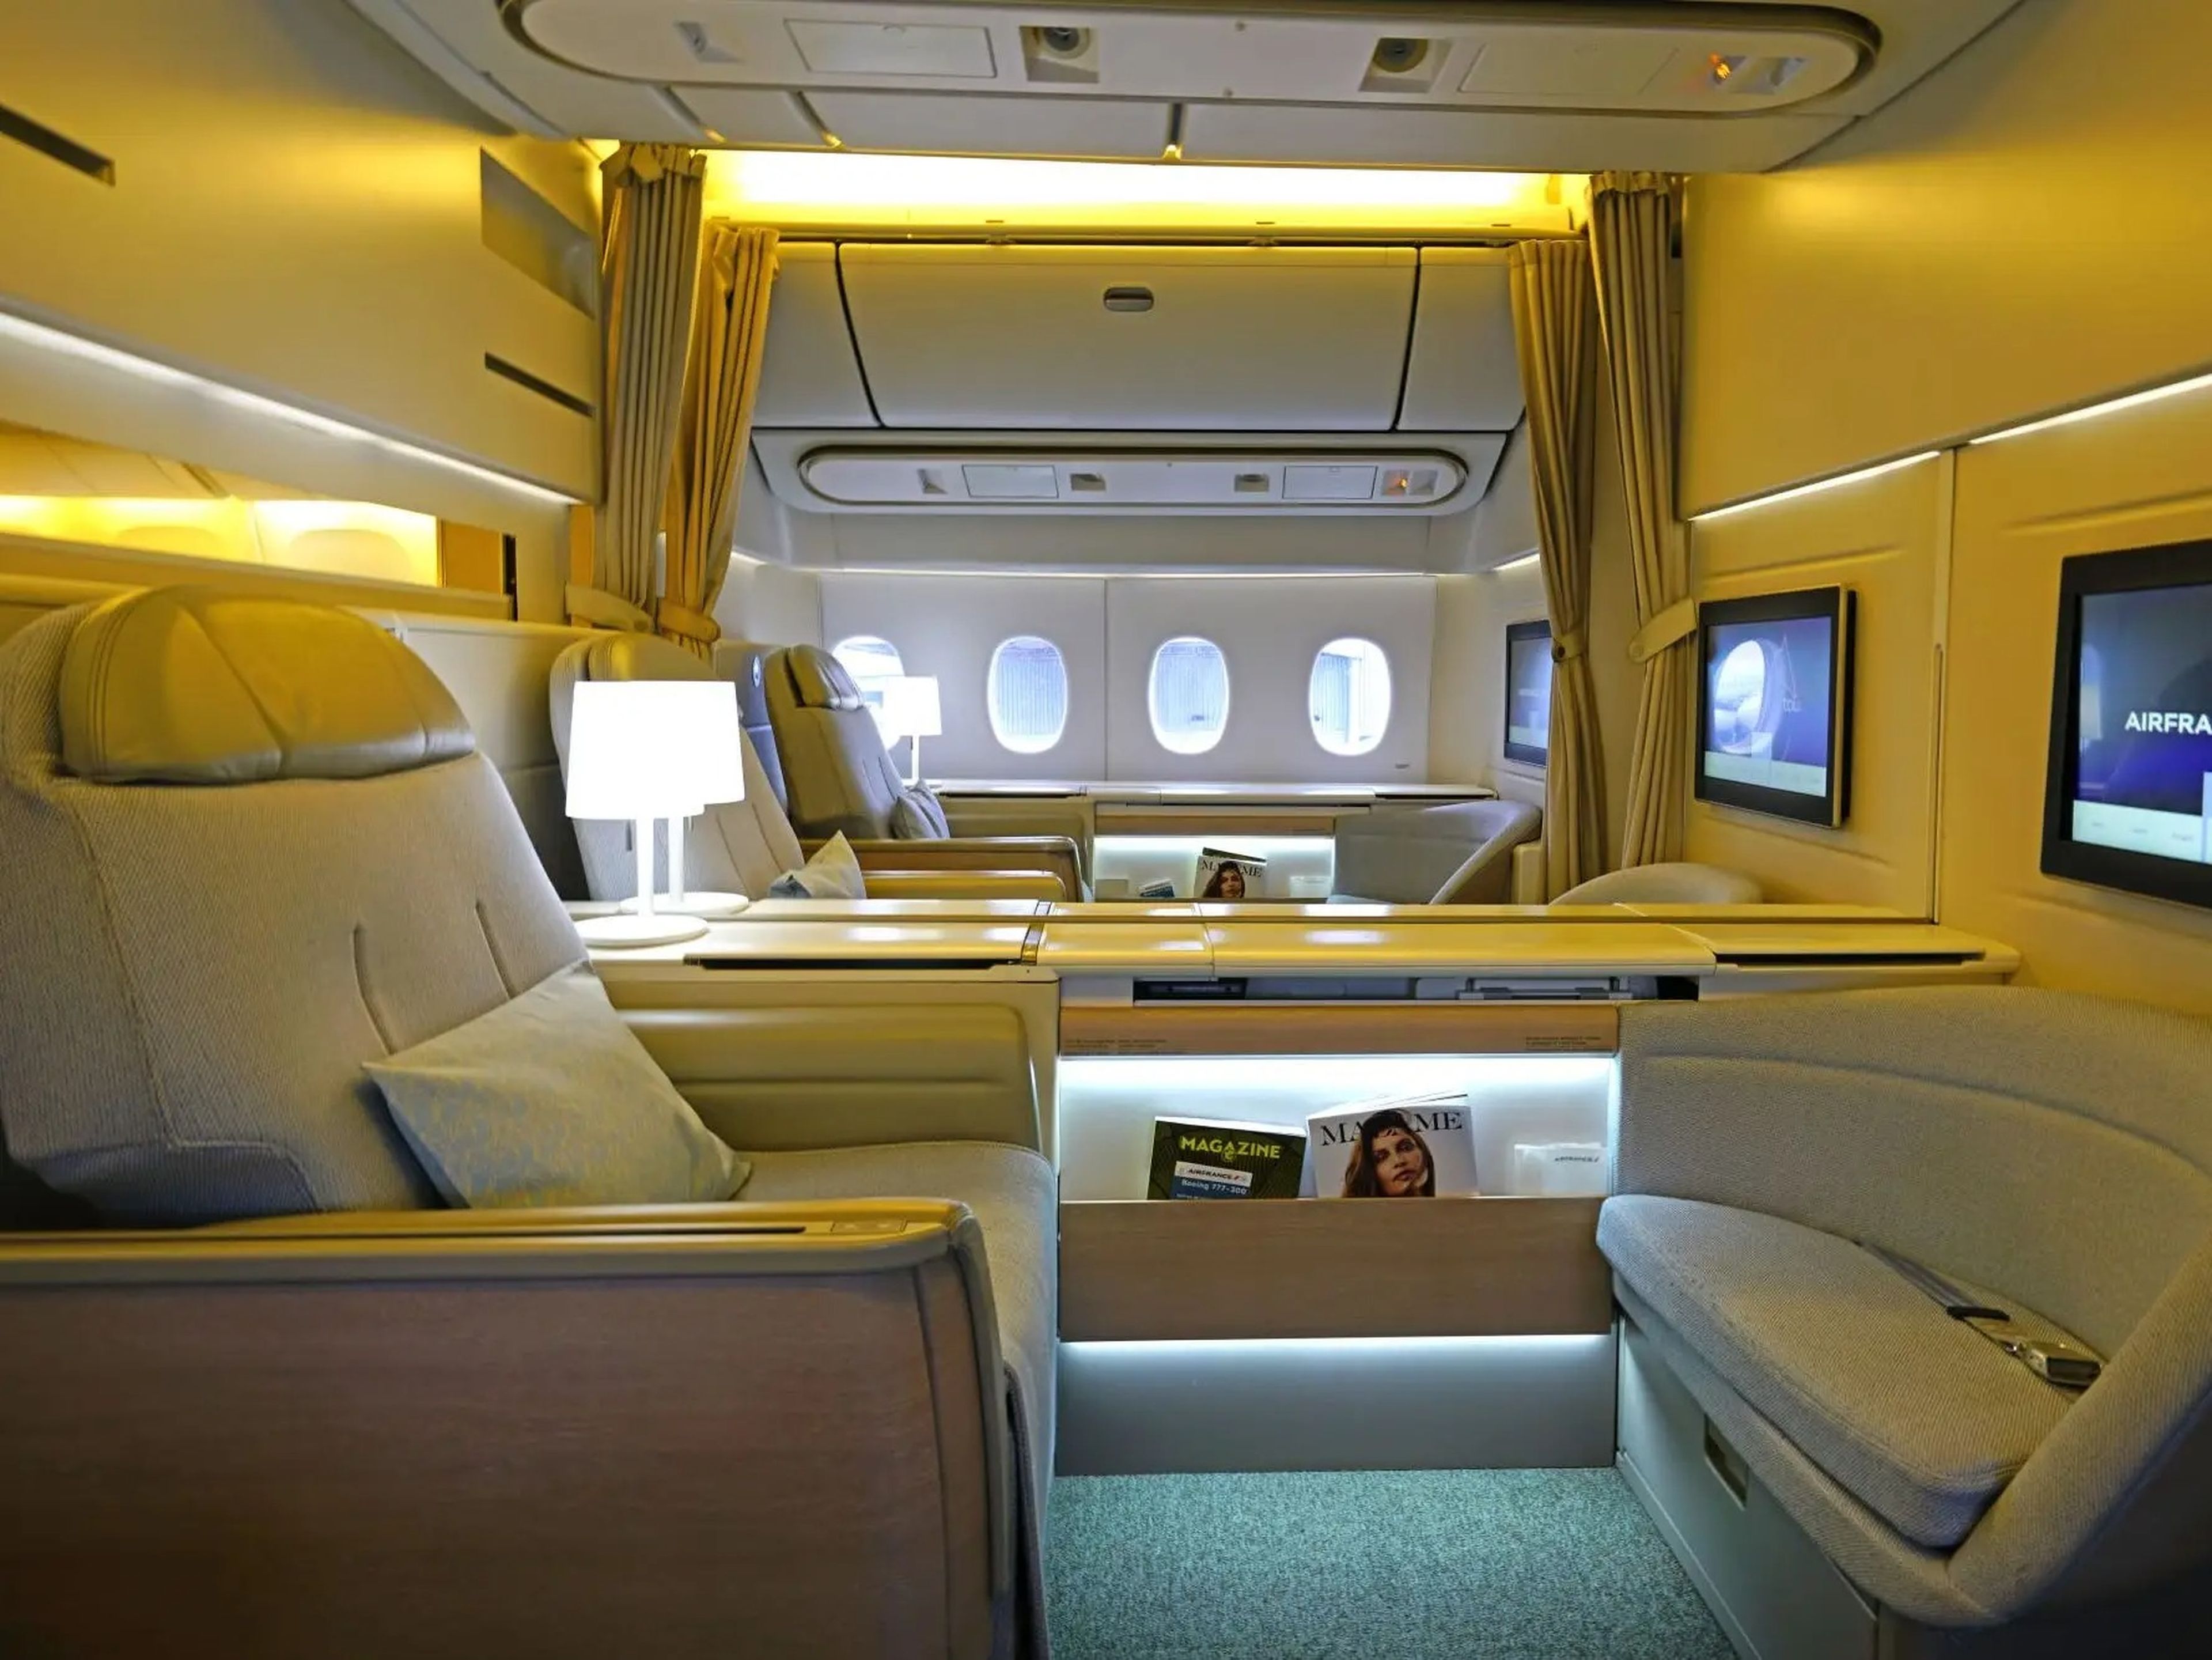 Air France first class seats.